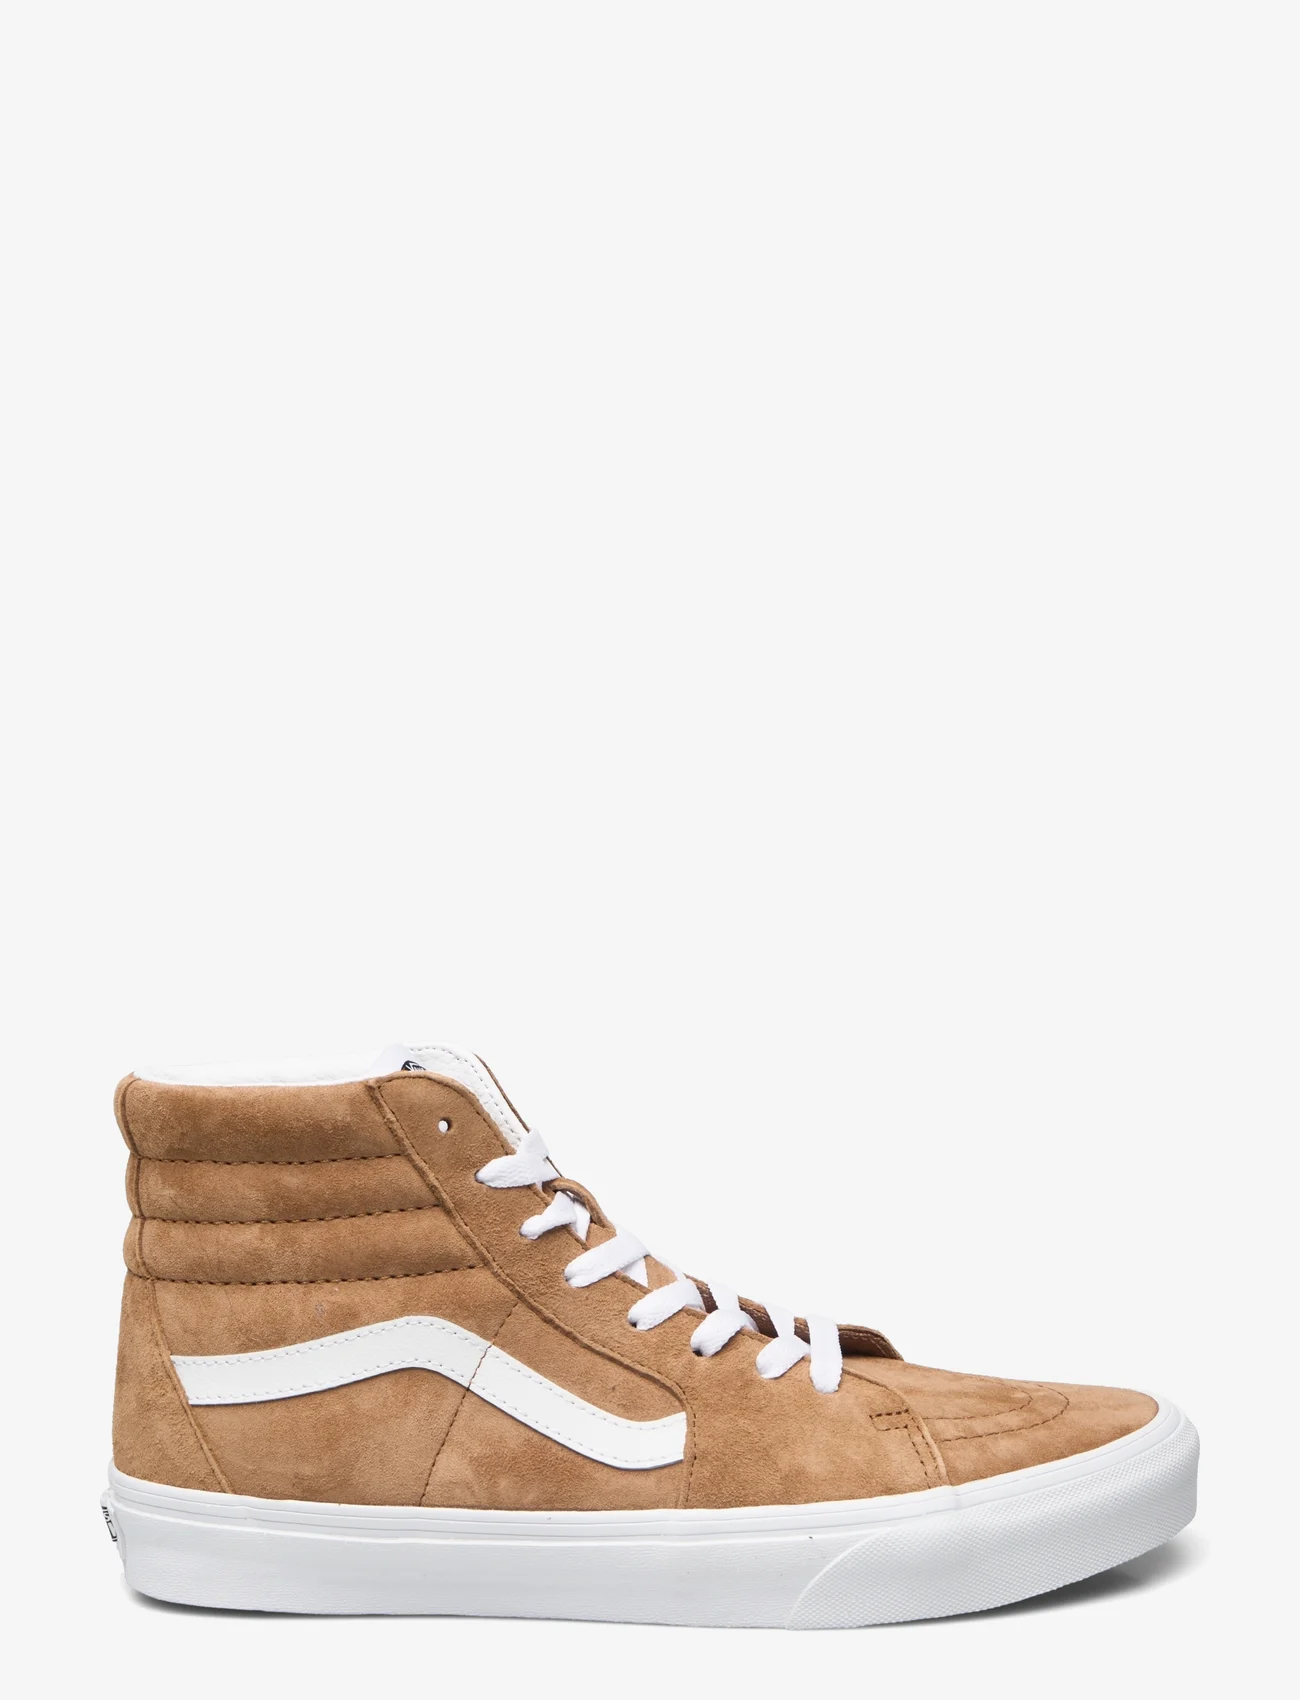 VANS - UA SK8-Hi - höga sneakers - tobacco brown - 1